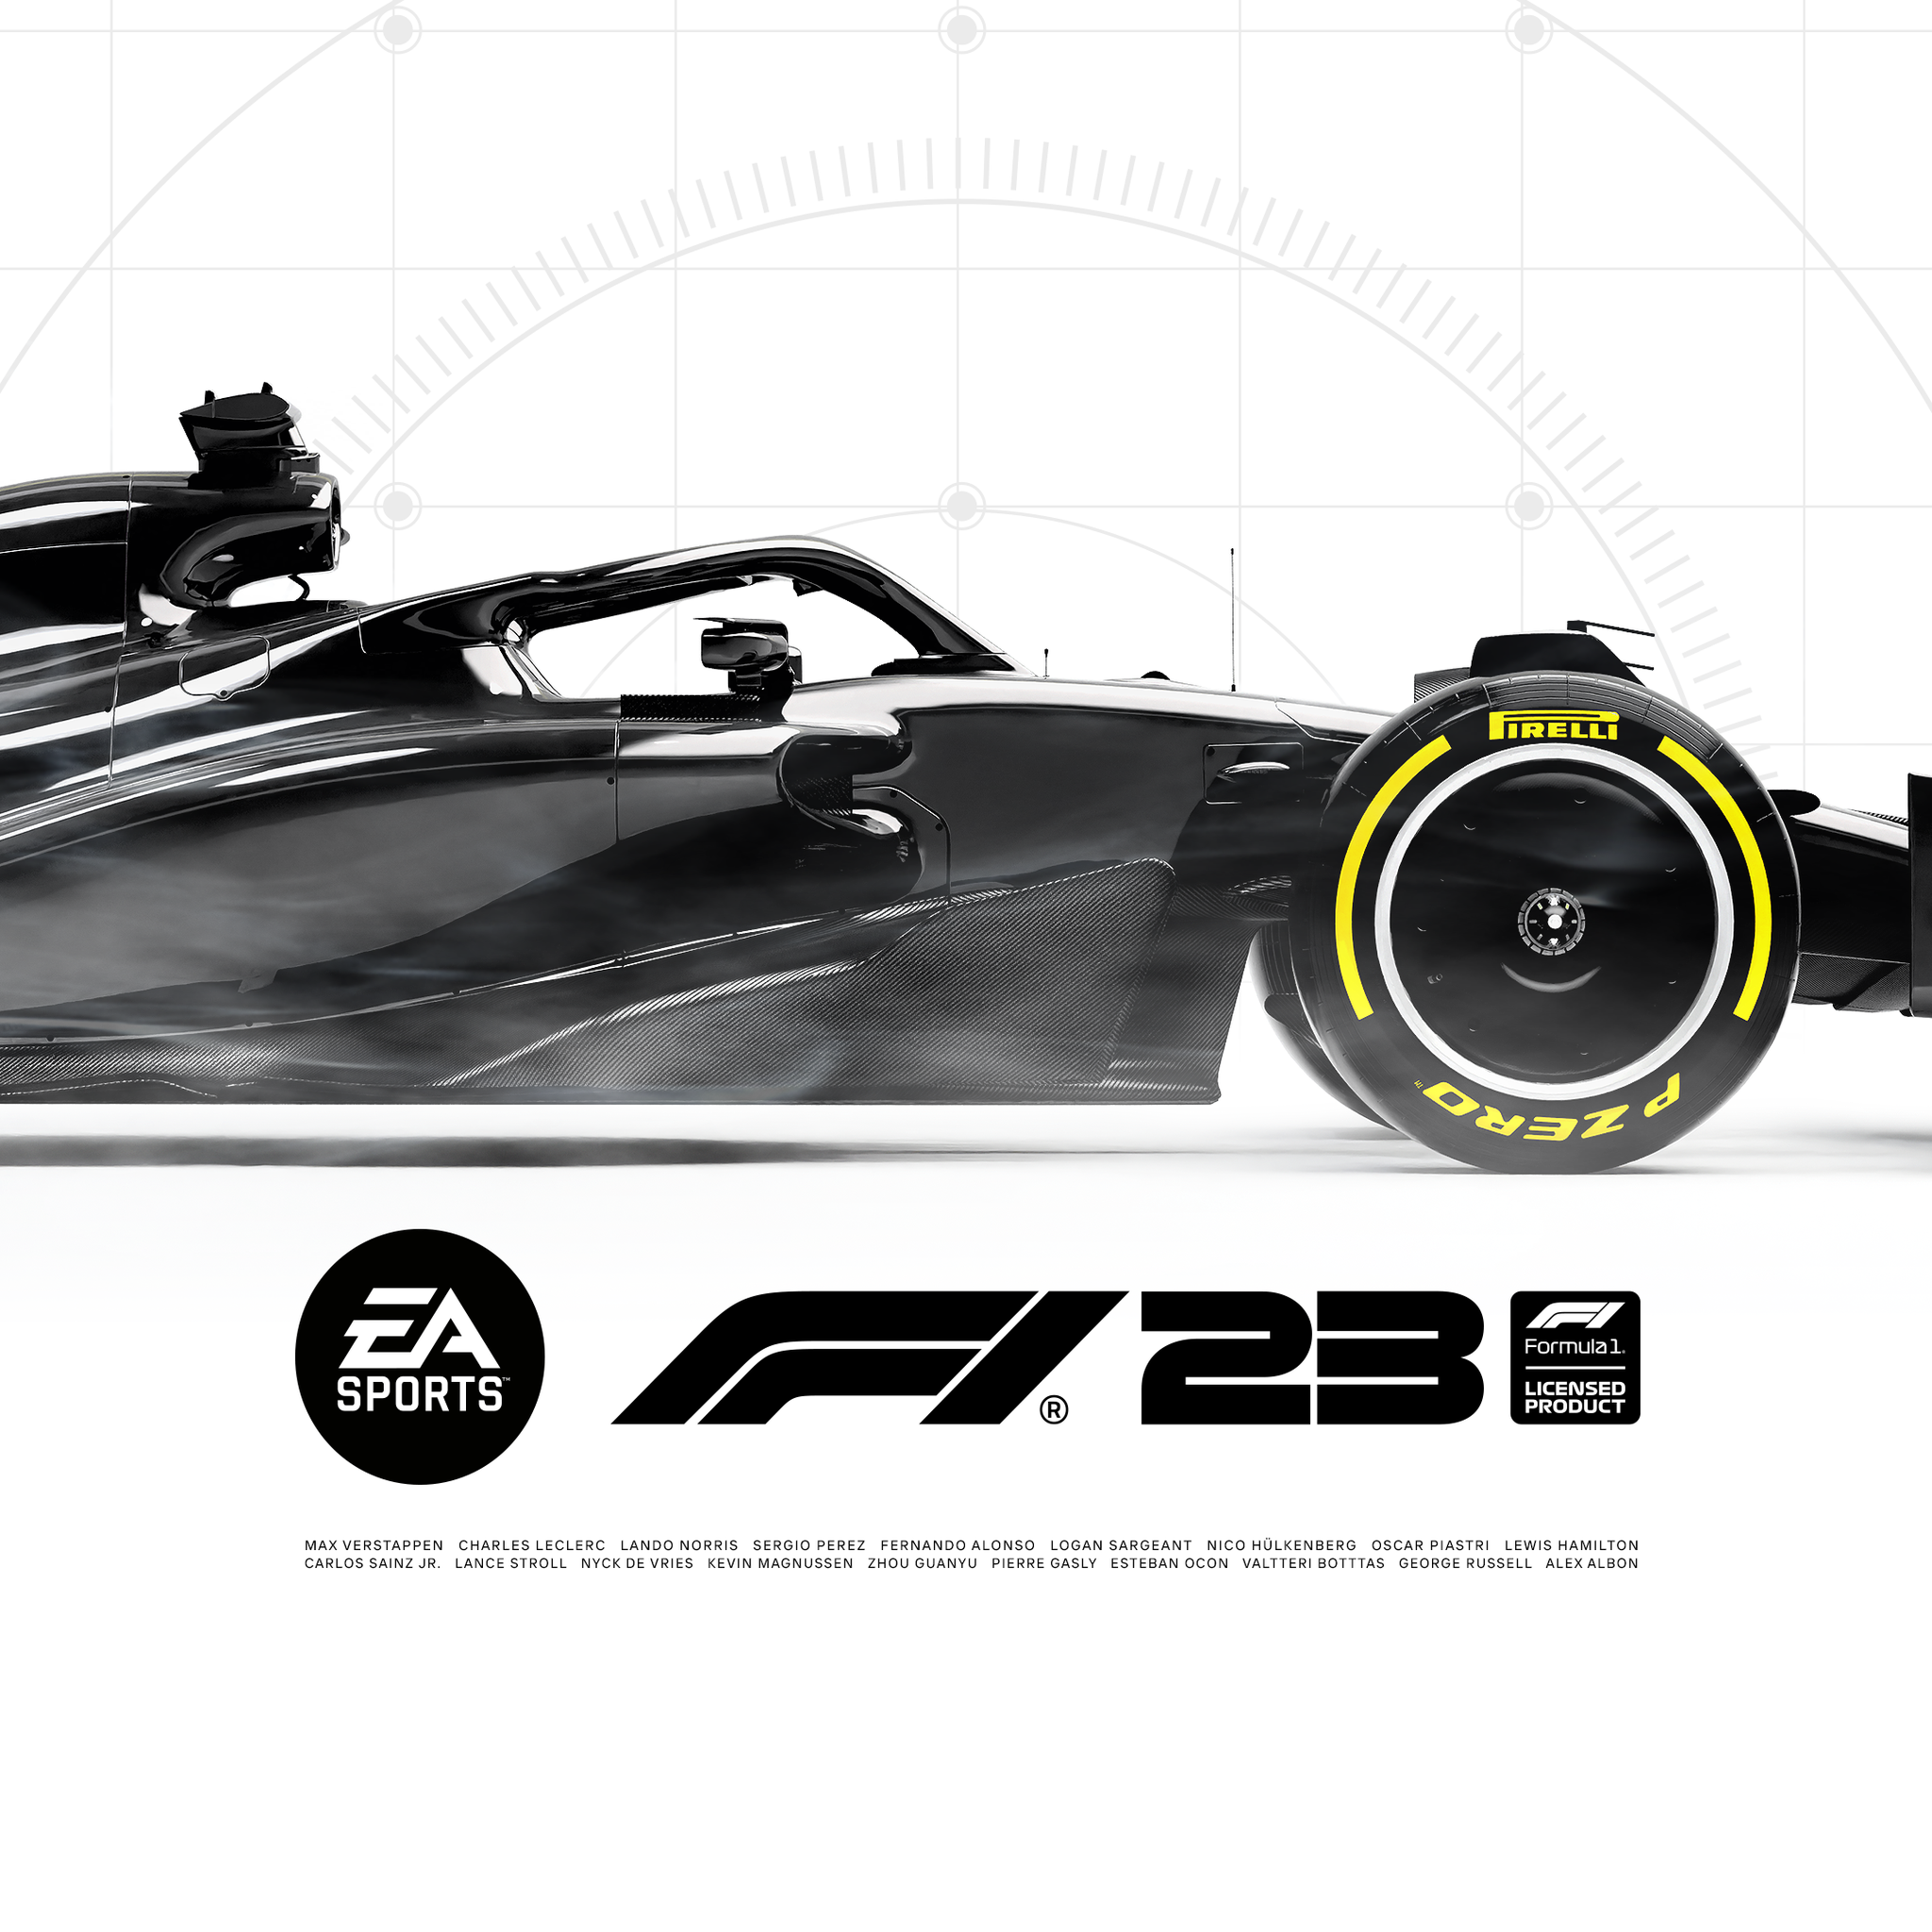 More information about "F1 23 EA Sports... esisterà!"